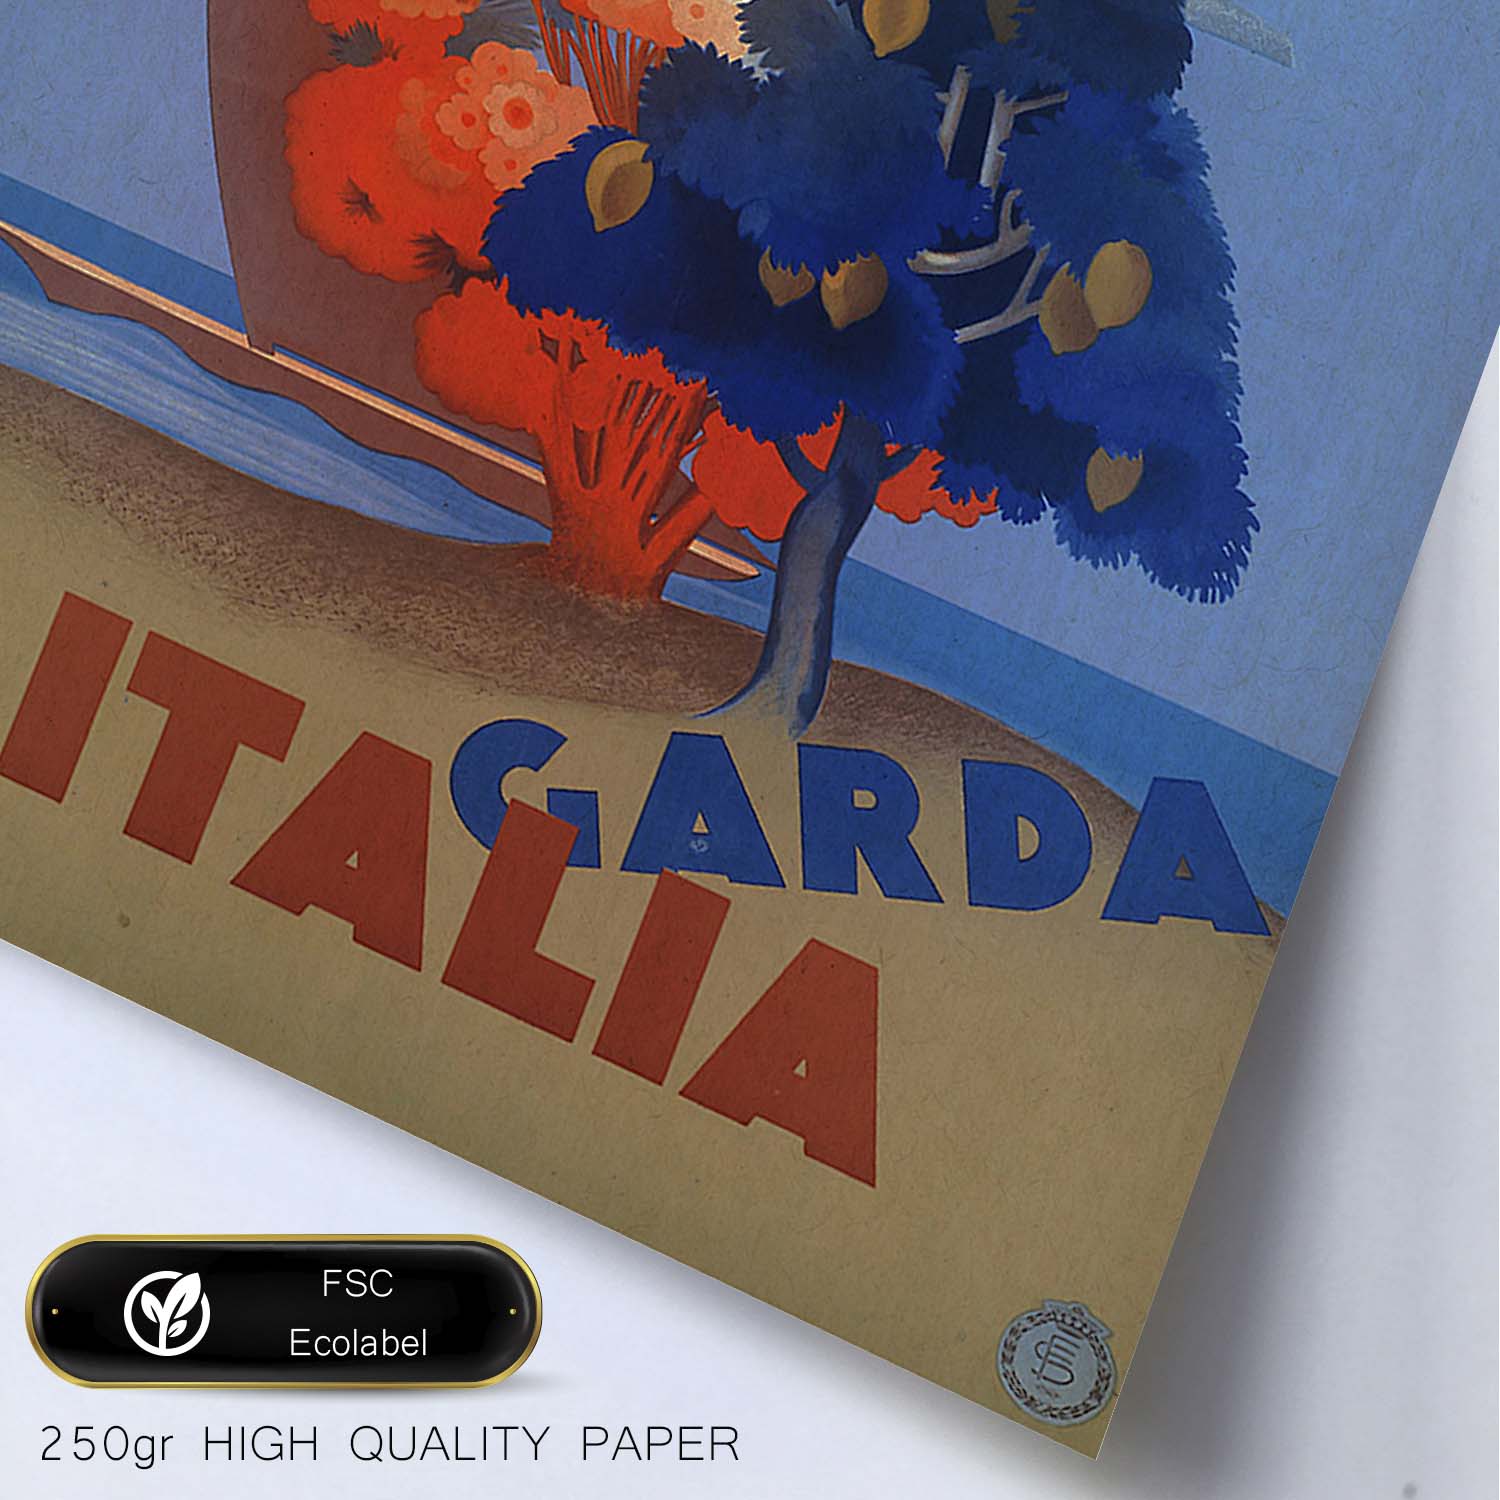 Poster vintage. Cartel vintage de Francia e Italia. Viaja a Grada.-Artwork-Nacnic-Nacnic Estudio SL